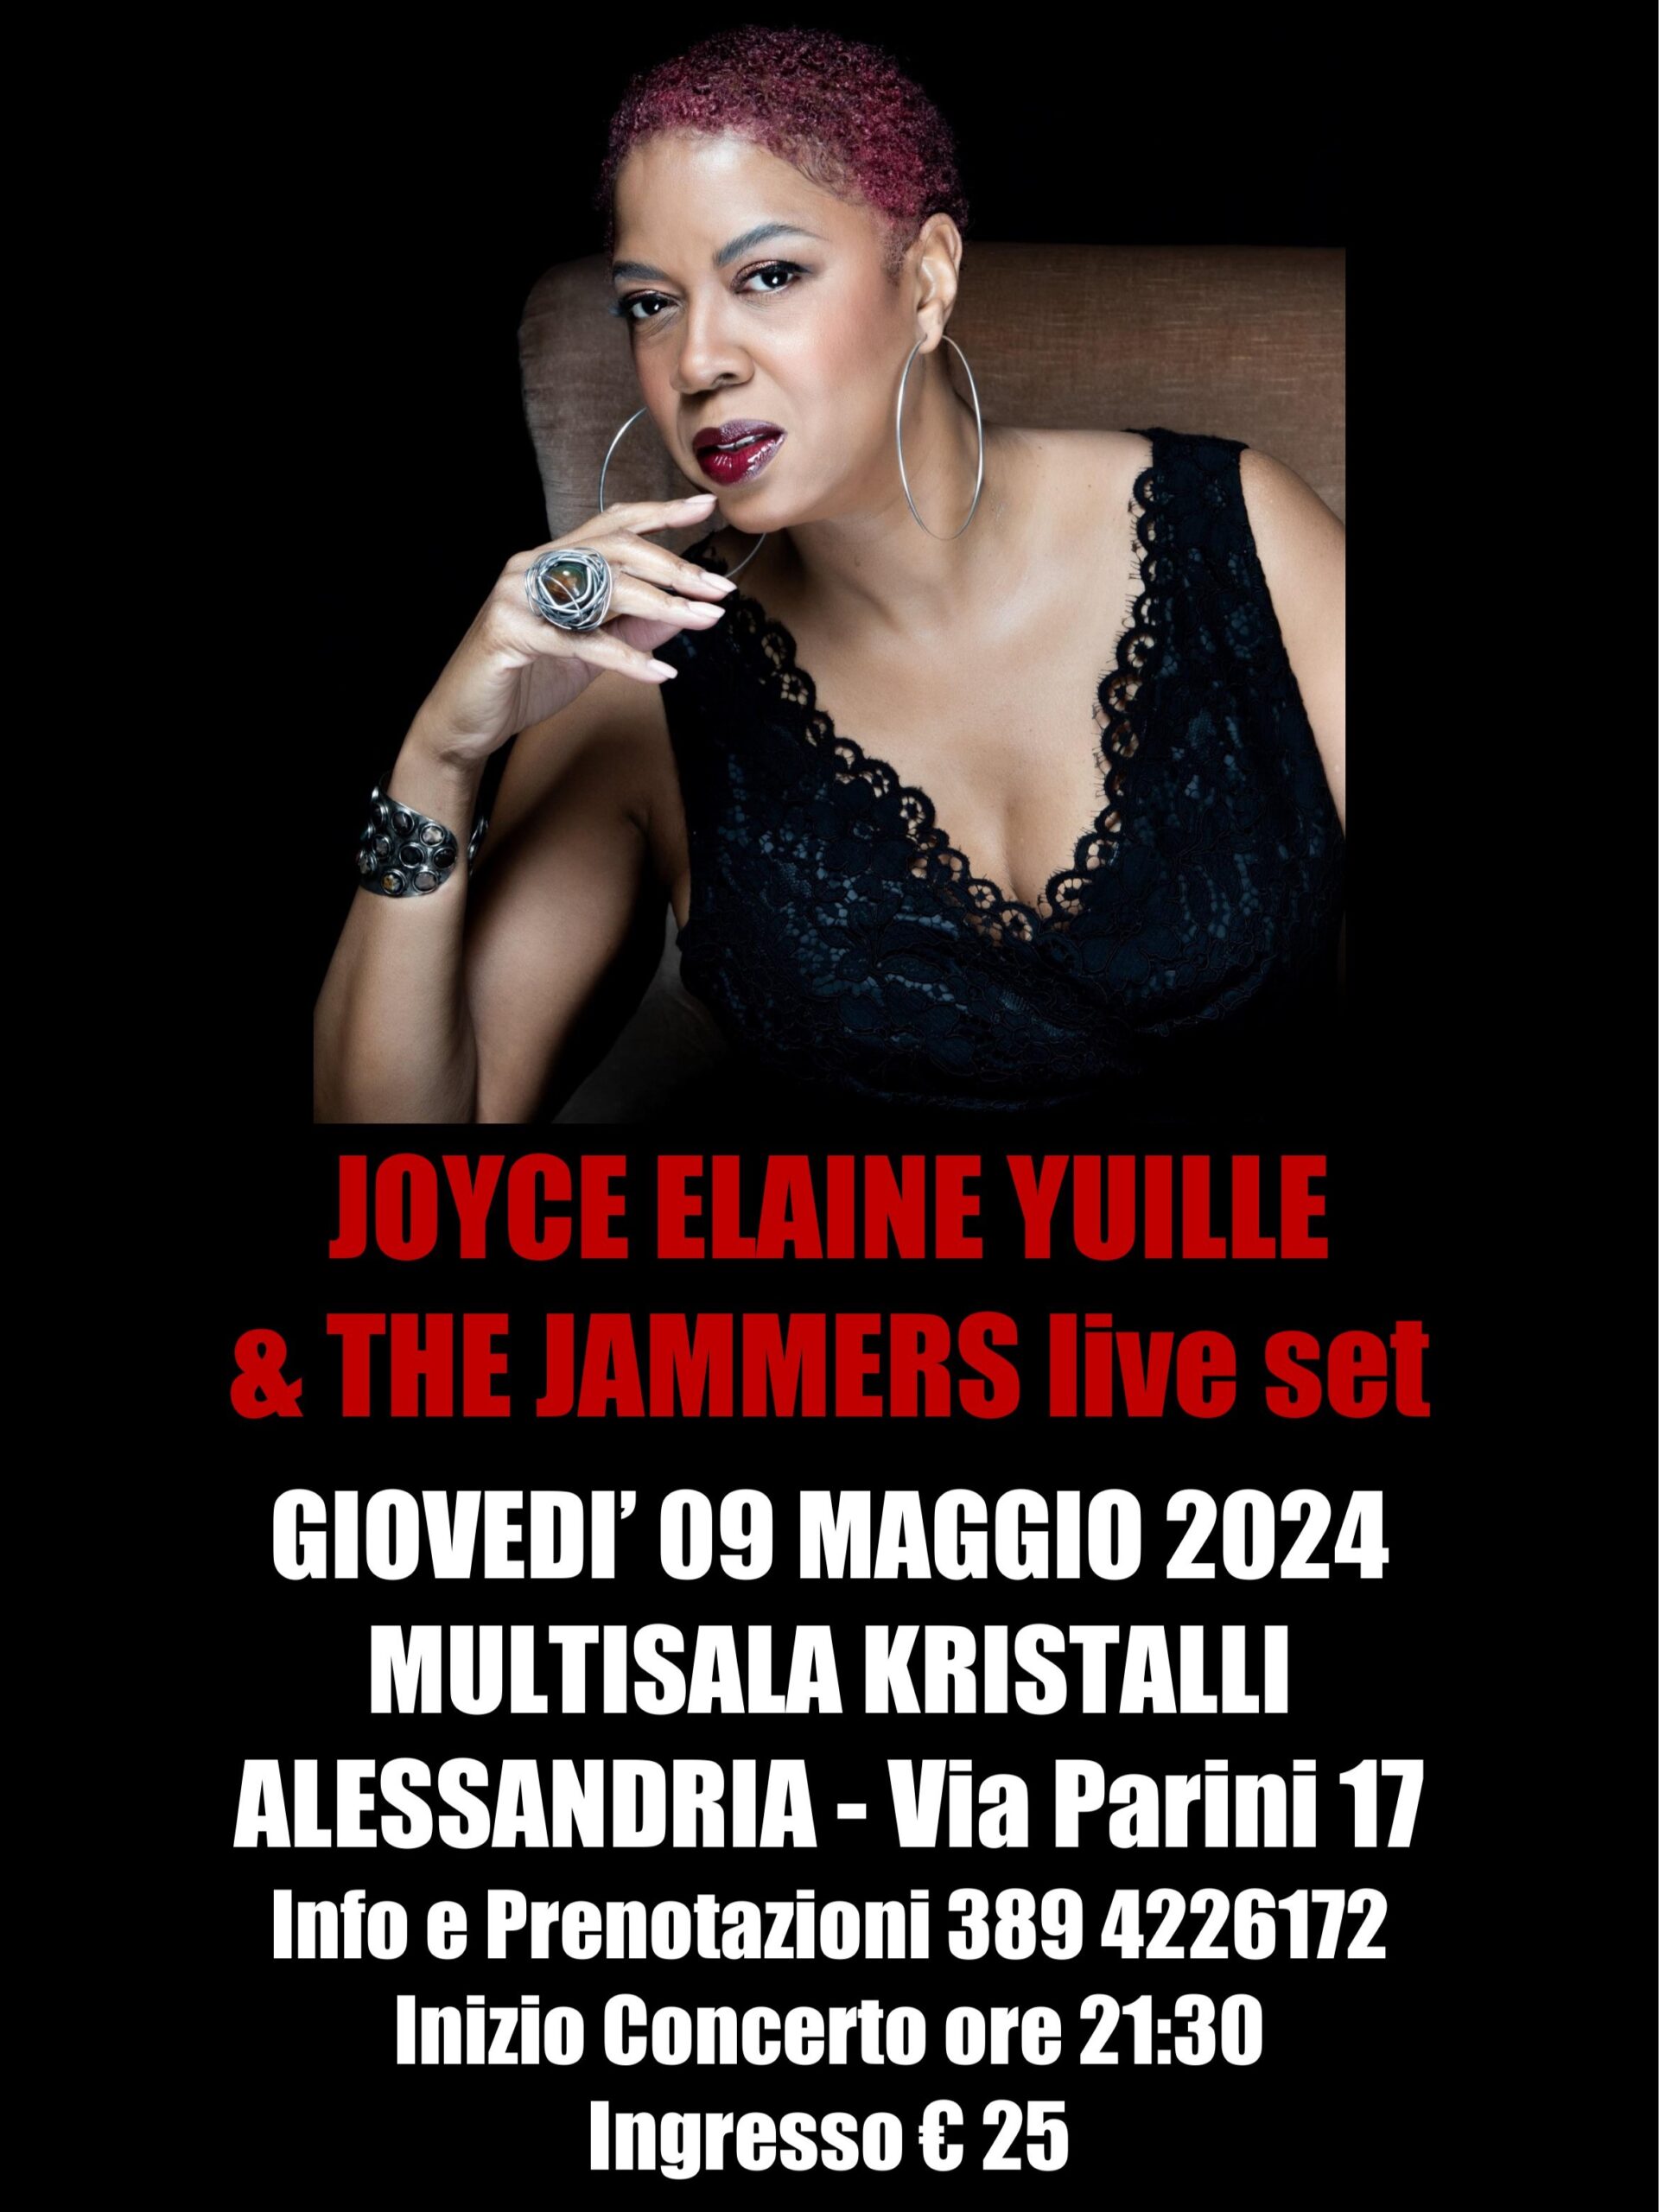 JOYCE ELAINE YUILLE & THE JAMMERS live set CONCERTO SALA KUBRICK  GIOVEDI 09/5/24 ORE 21.30